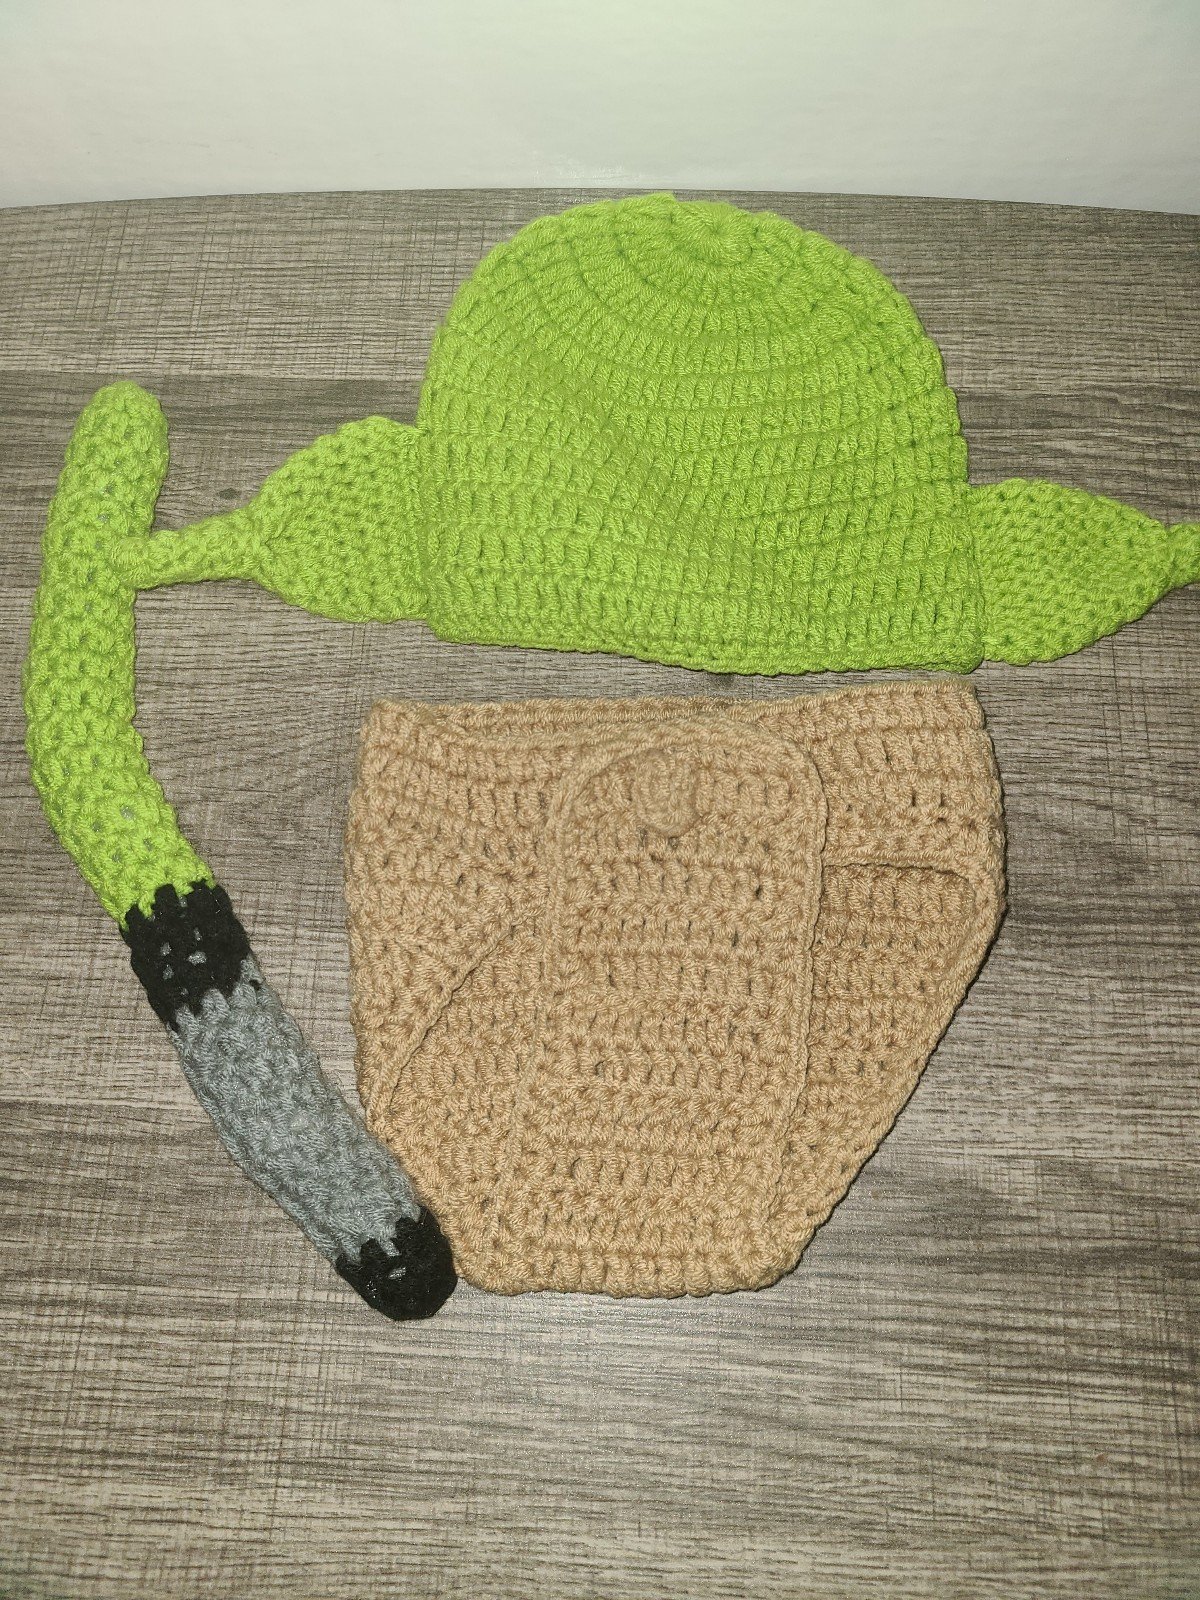 Yoda crocheted infant outfit kU3hi0NFY